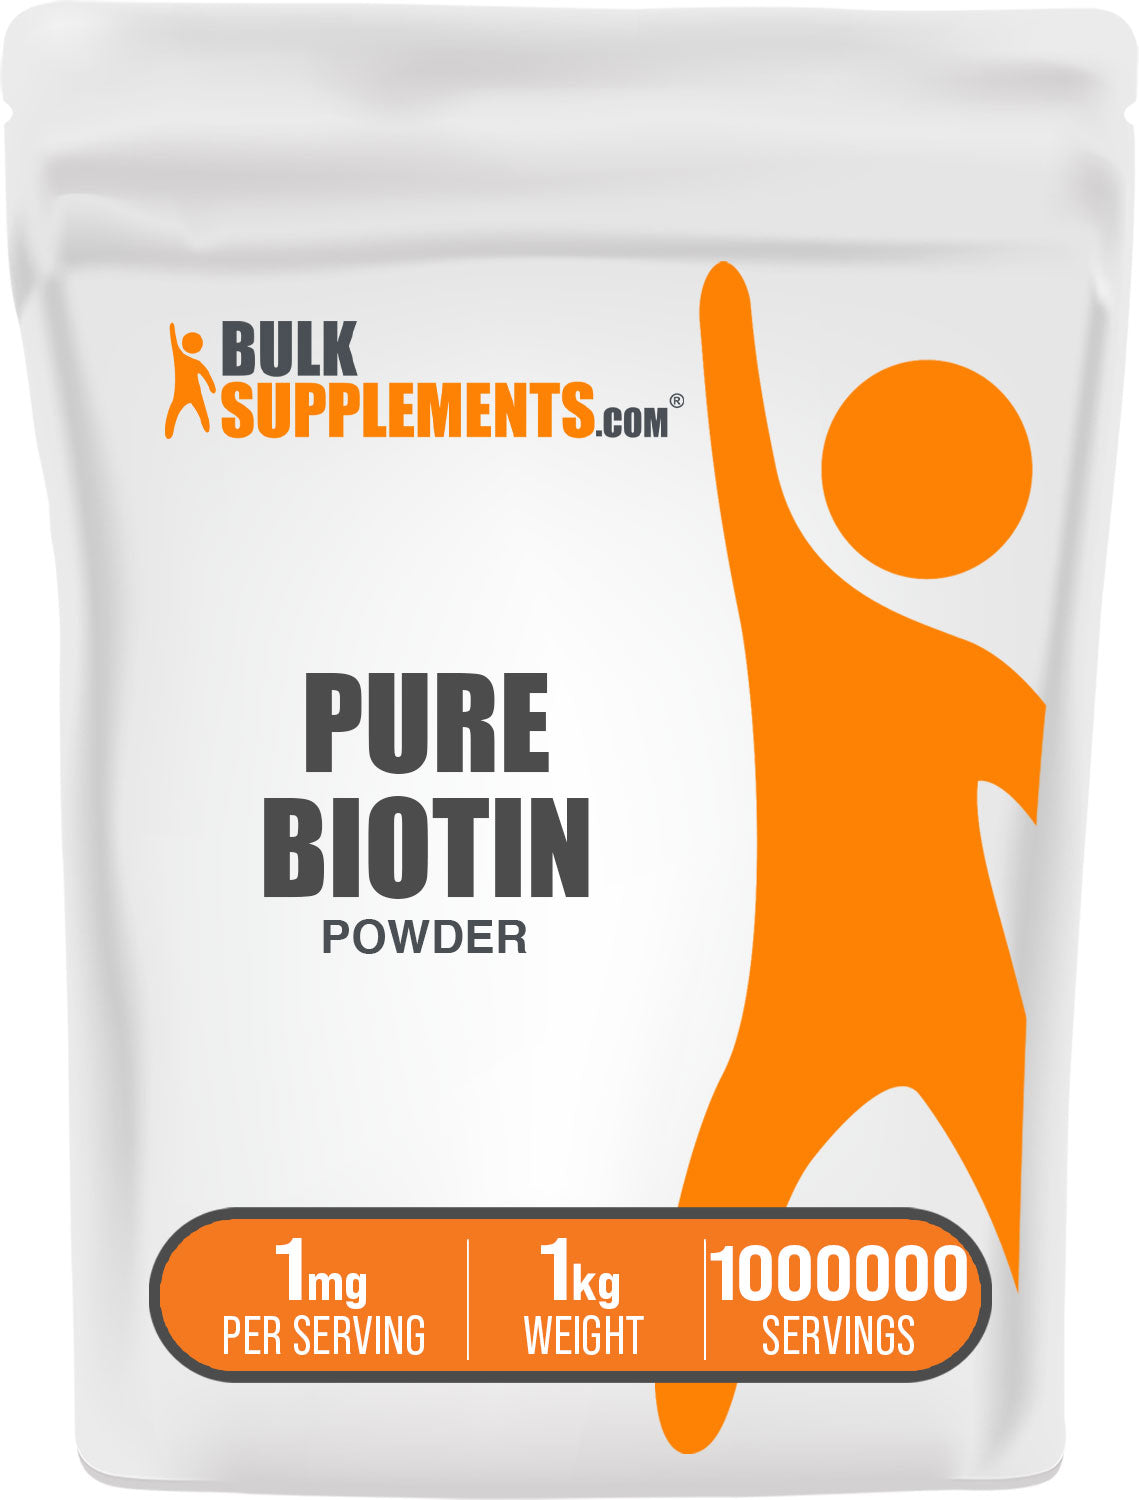 Pure Biotin Powder 1kg bag